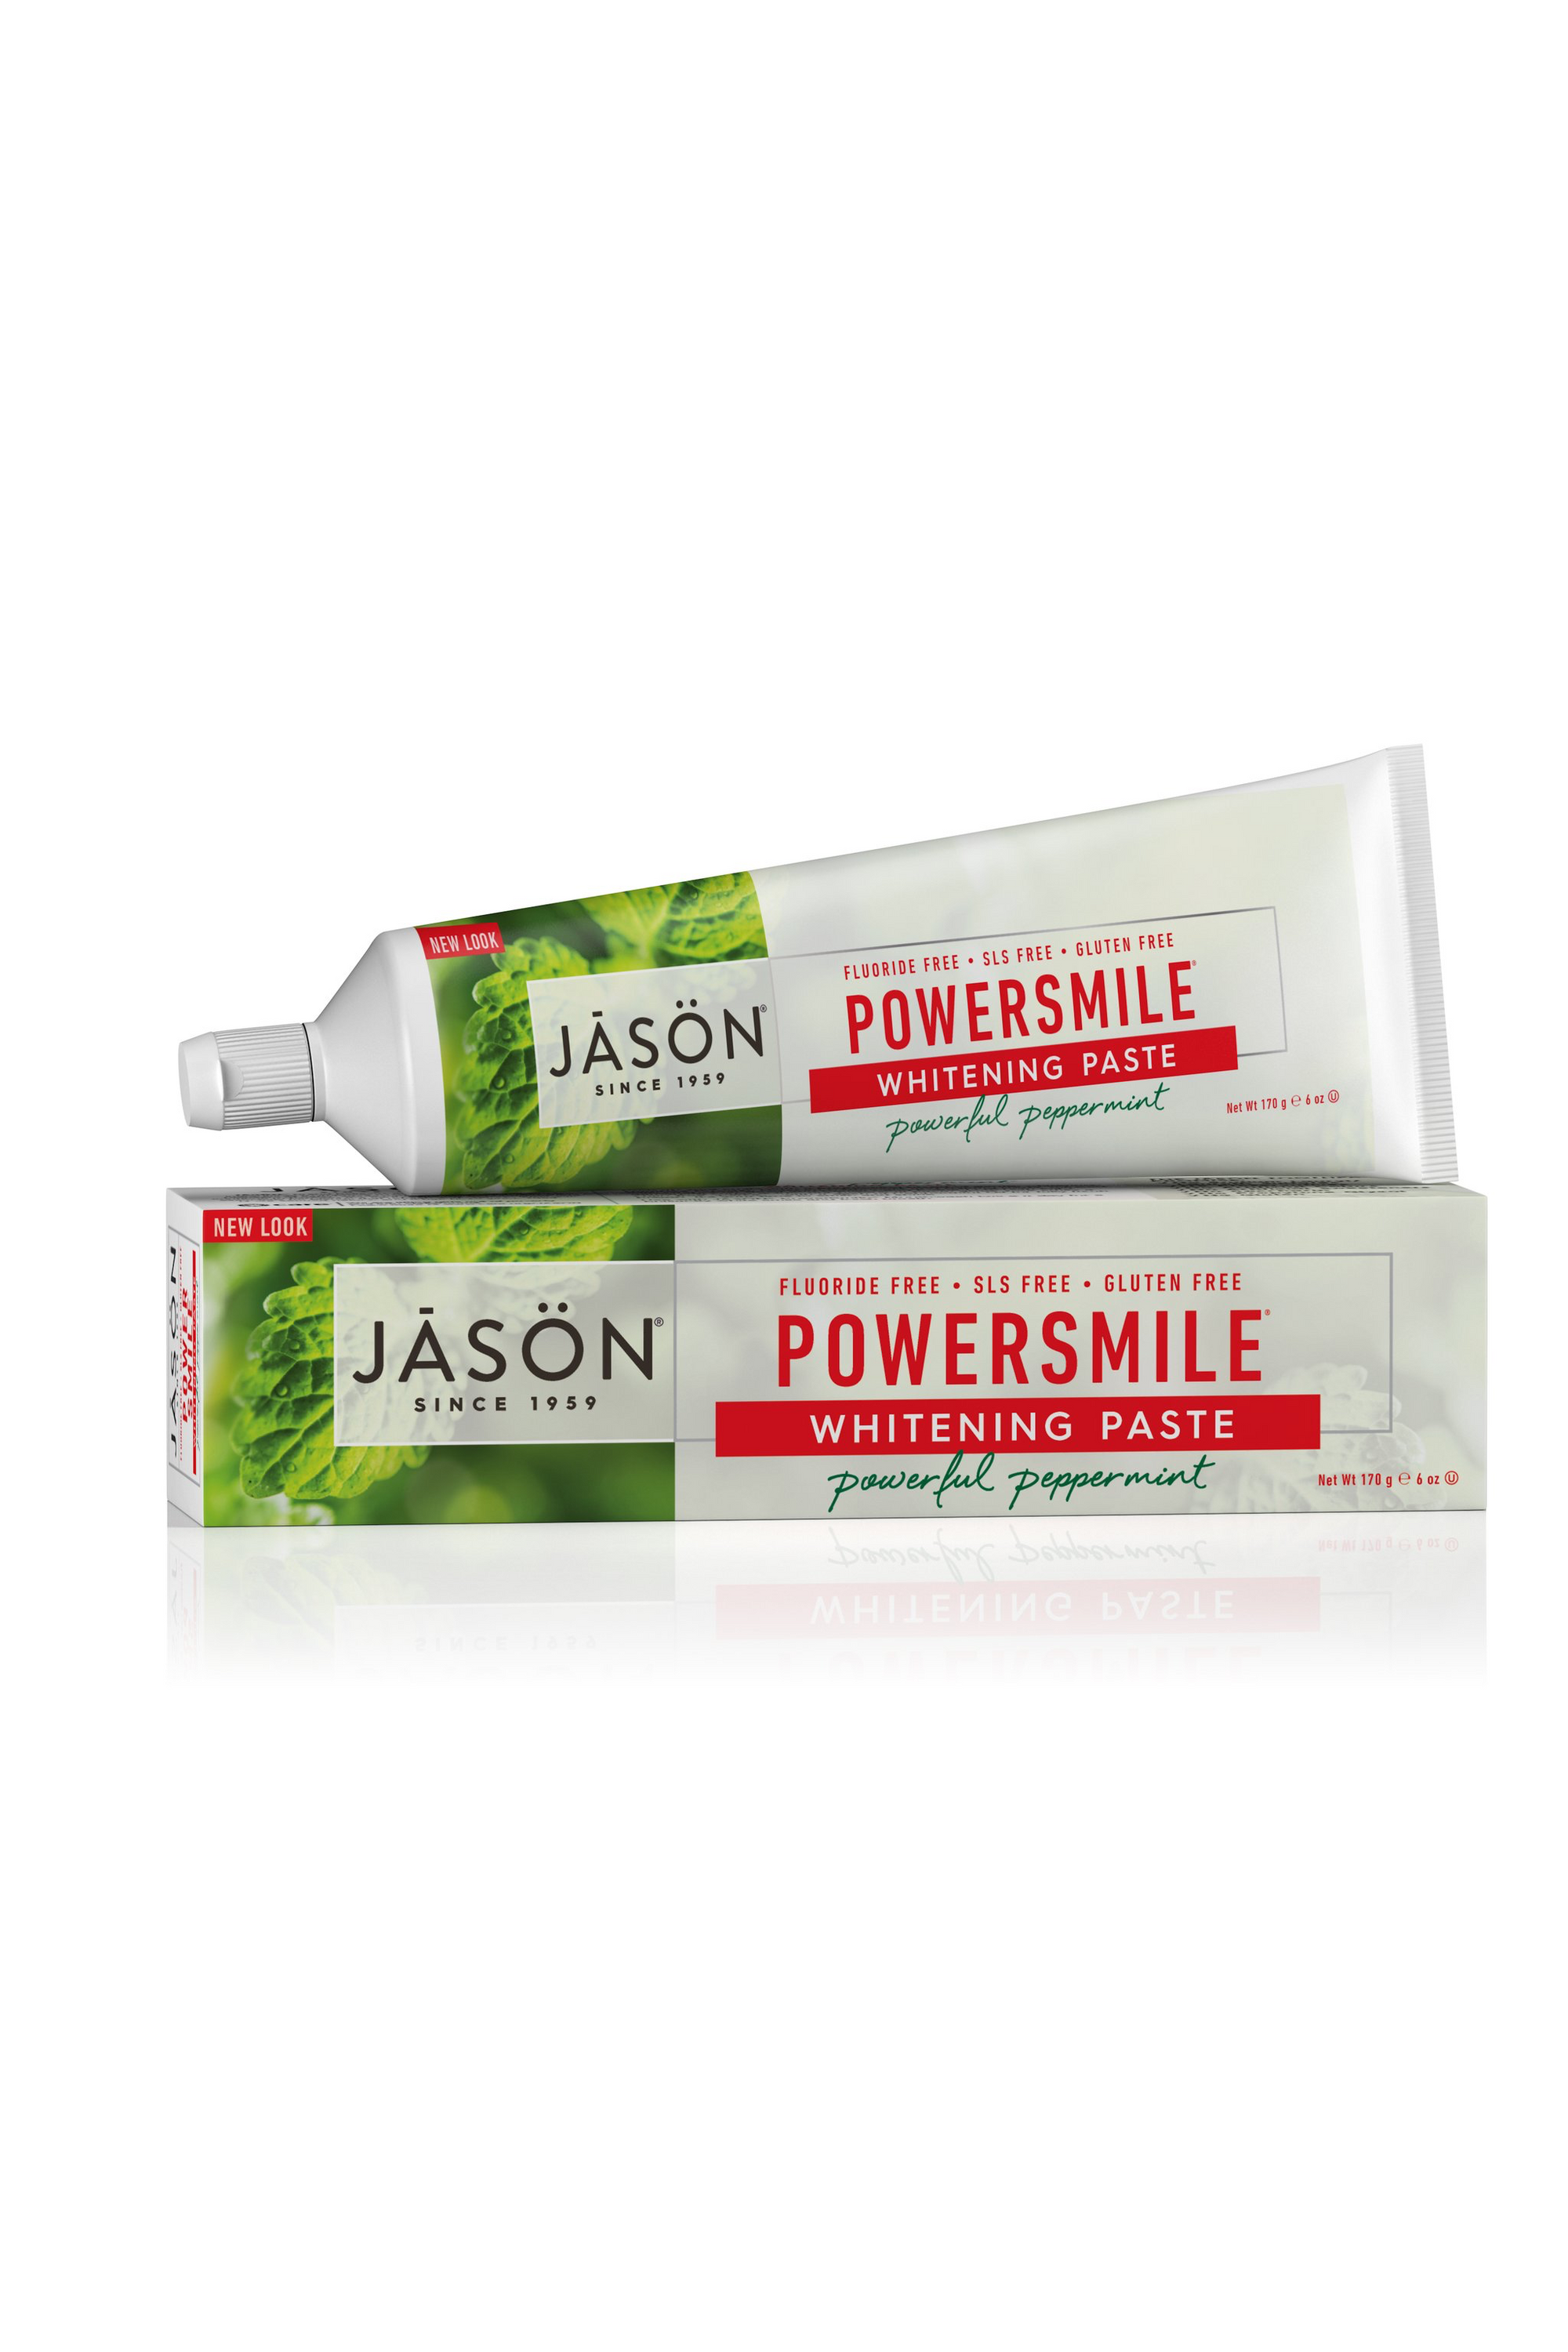 Jason Powersmile® Whitening Paste Powerful Peppermint 170G